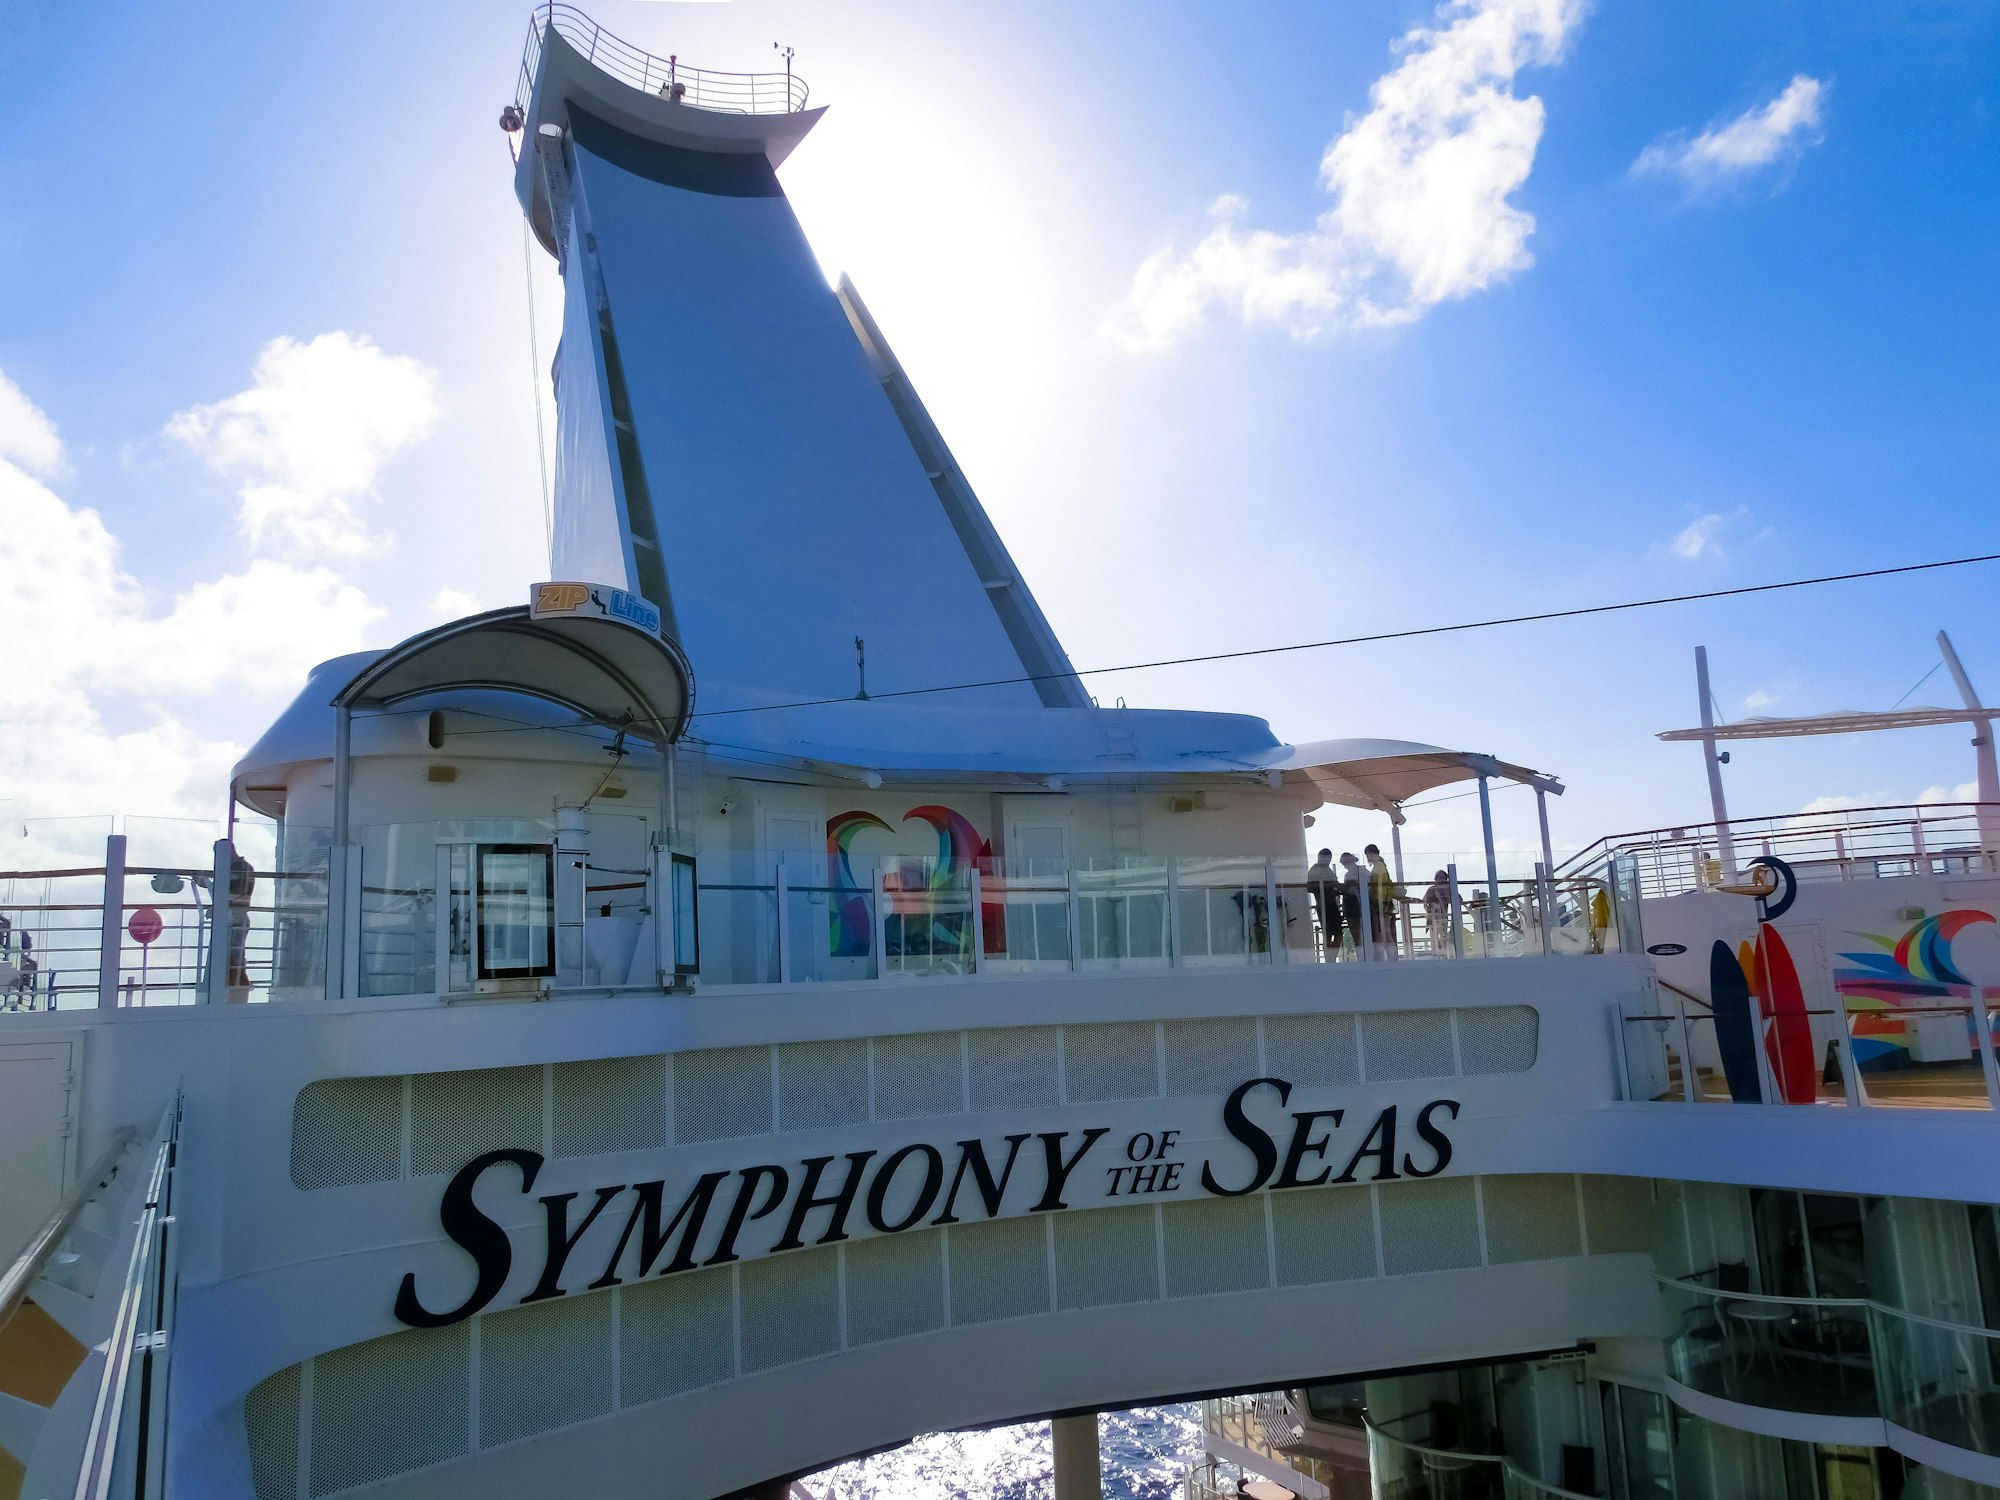 Das Deck des Schiffes„Symphony of the seas“